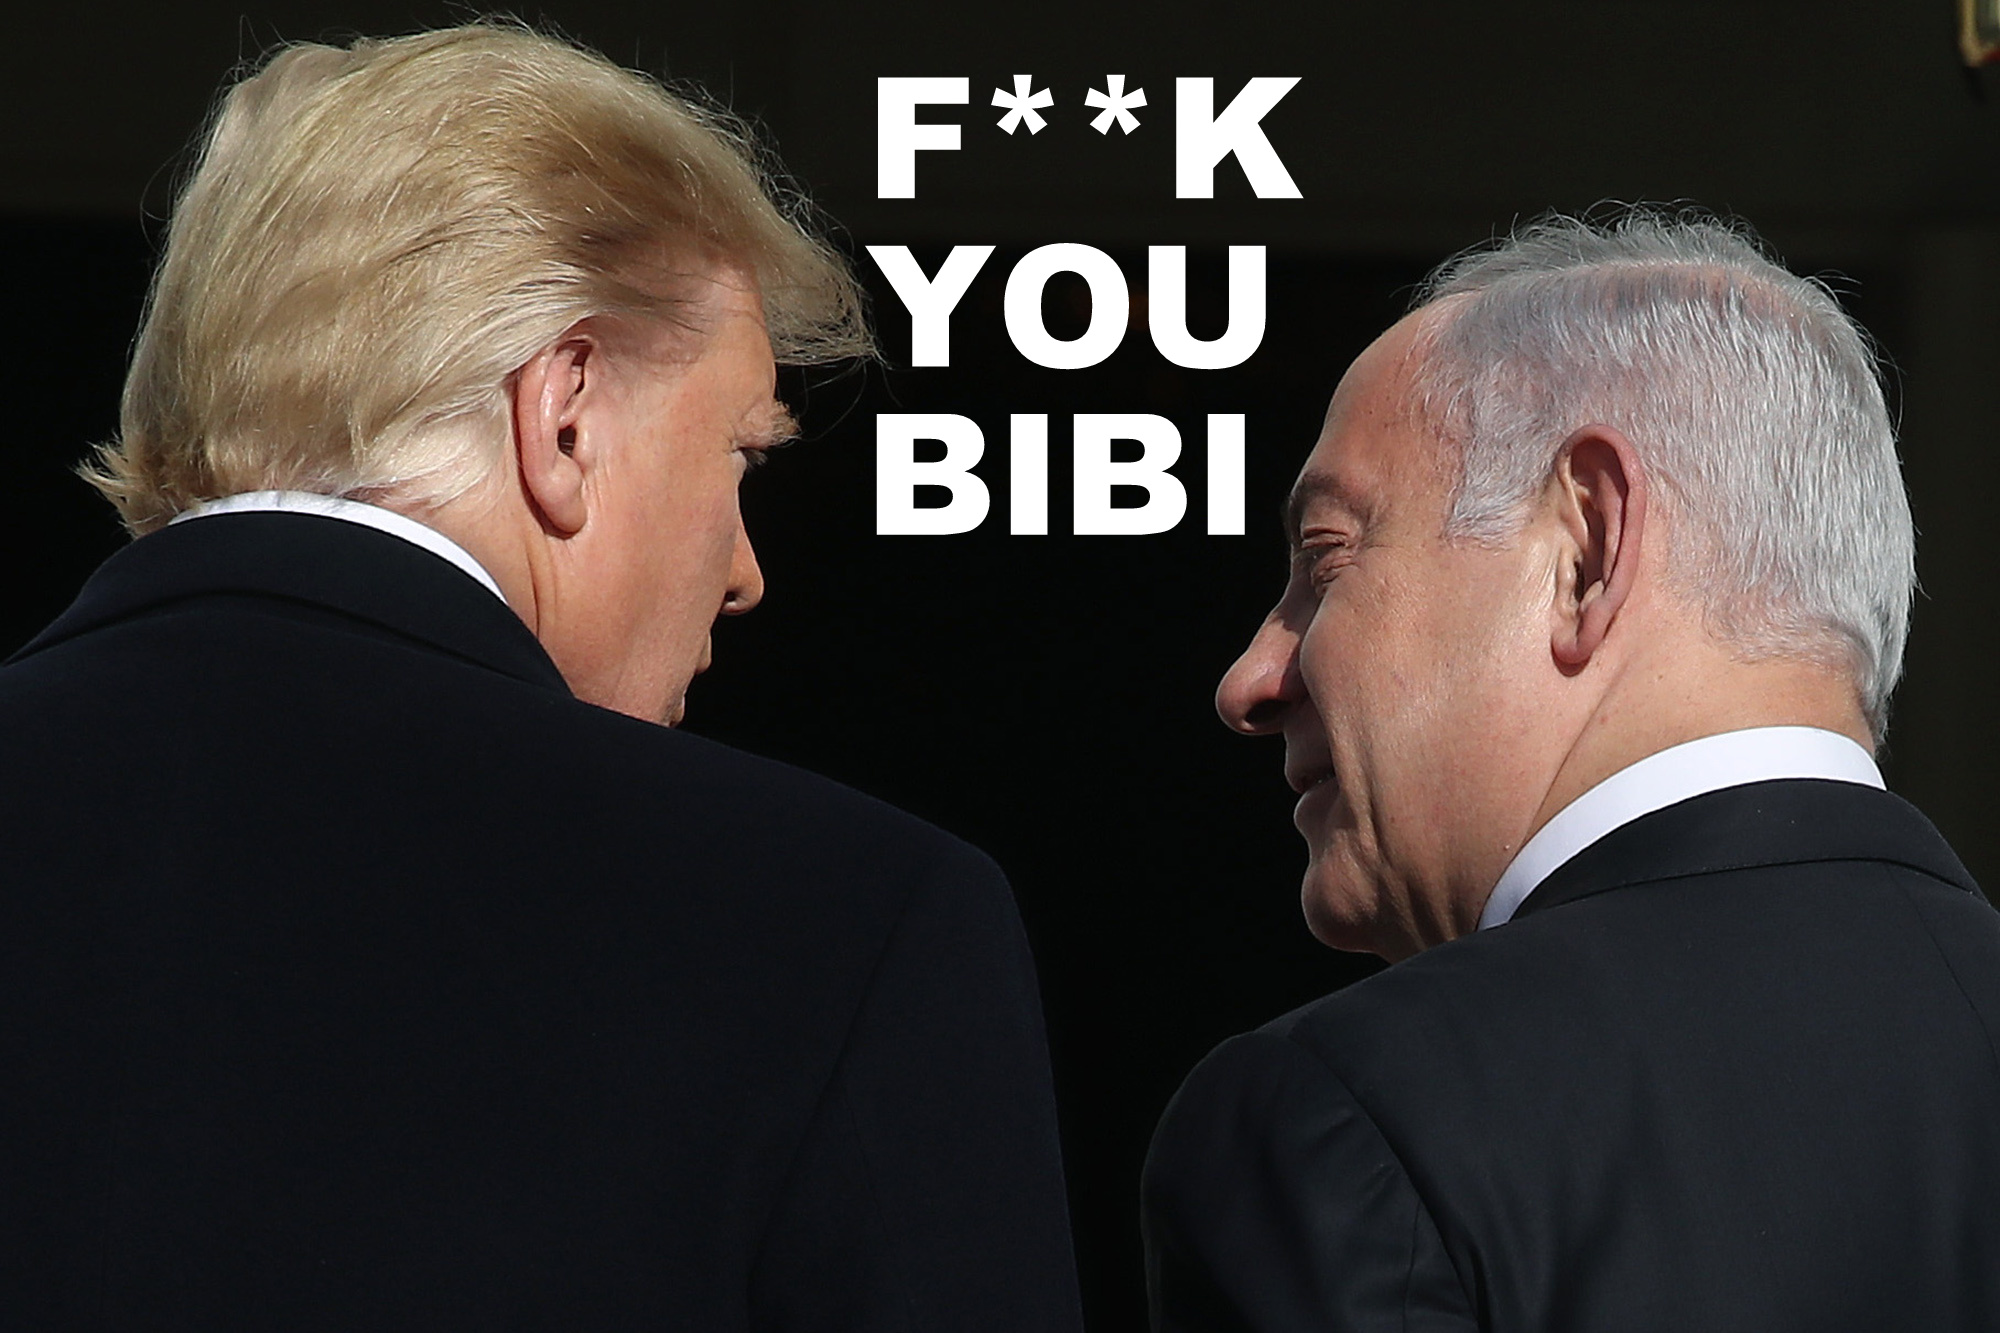 Trump l-a aranjat în direct pe Netanyahu: F**K HIM!